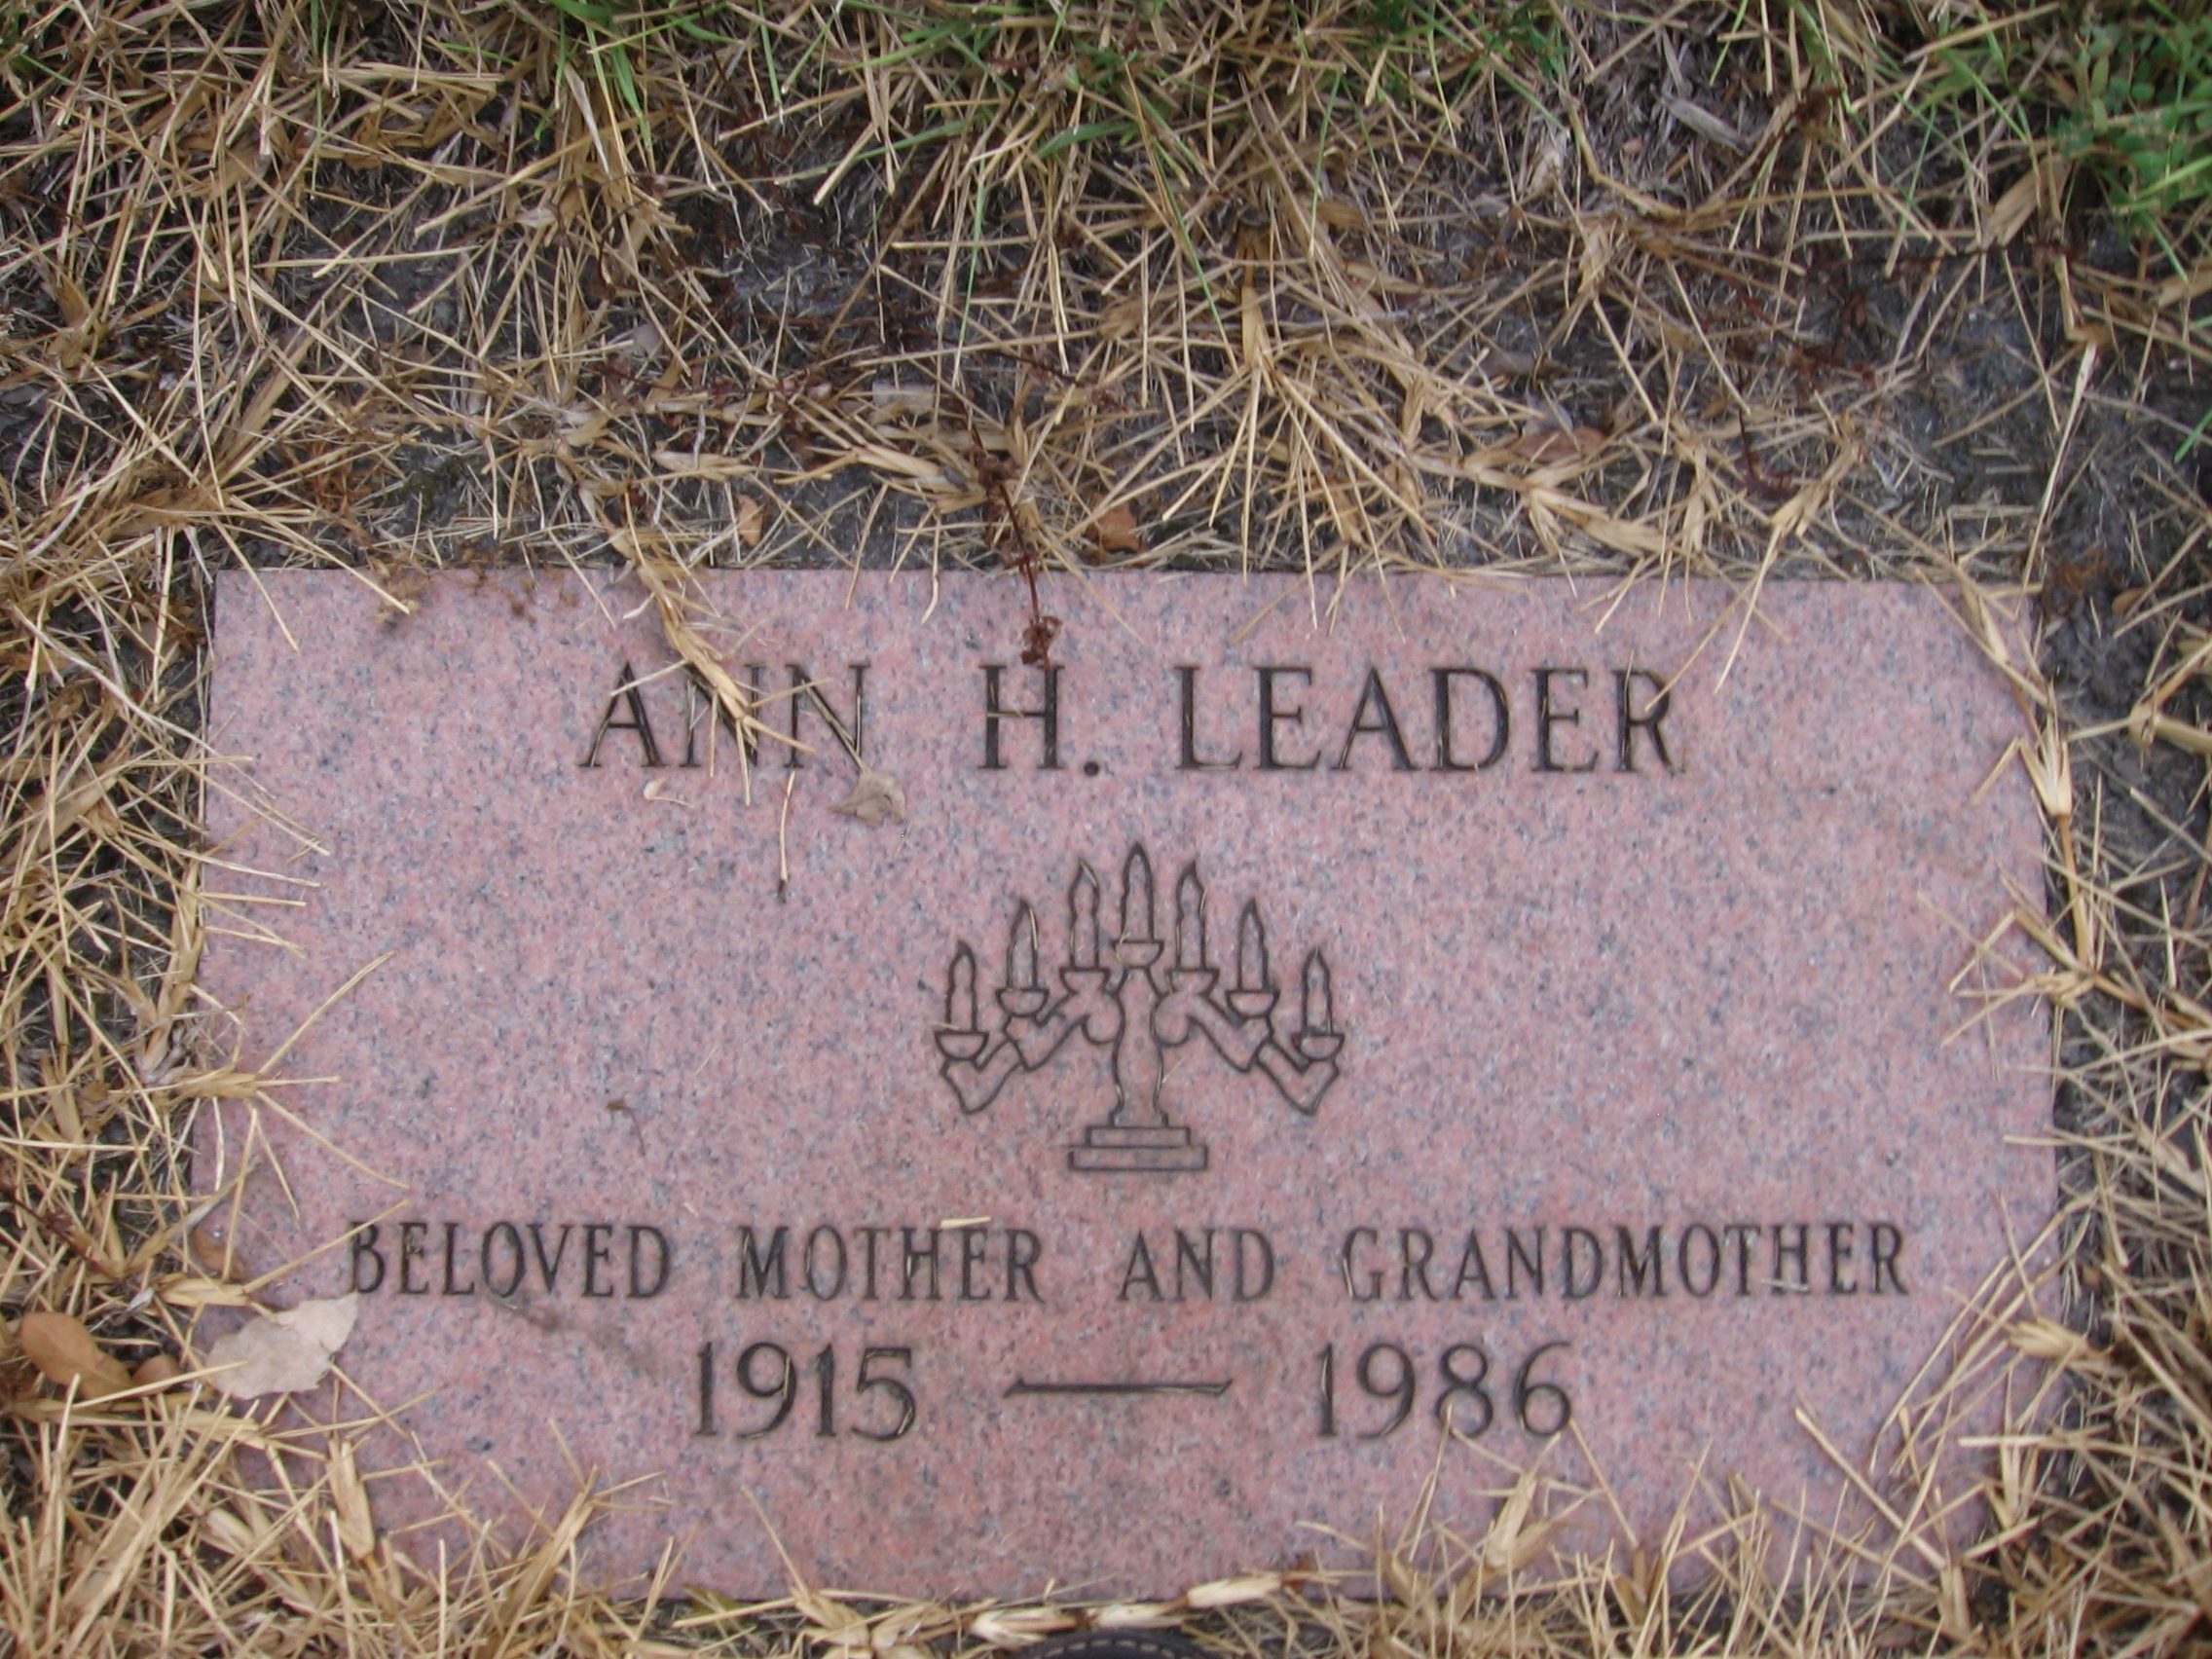 Ann H Leader